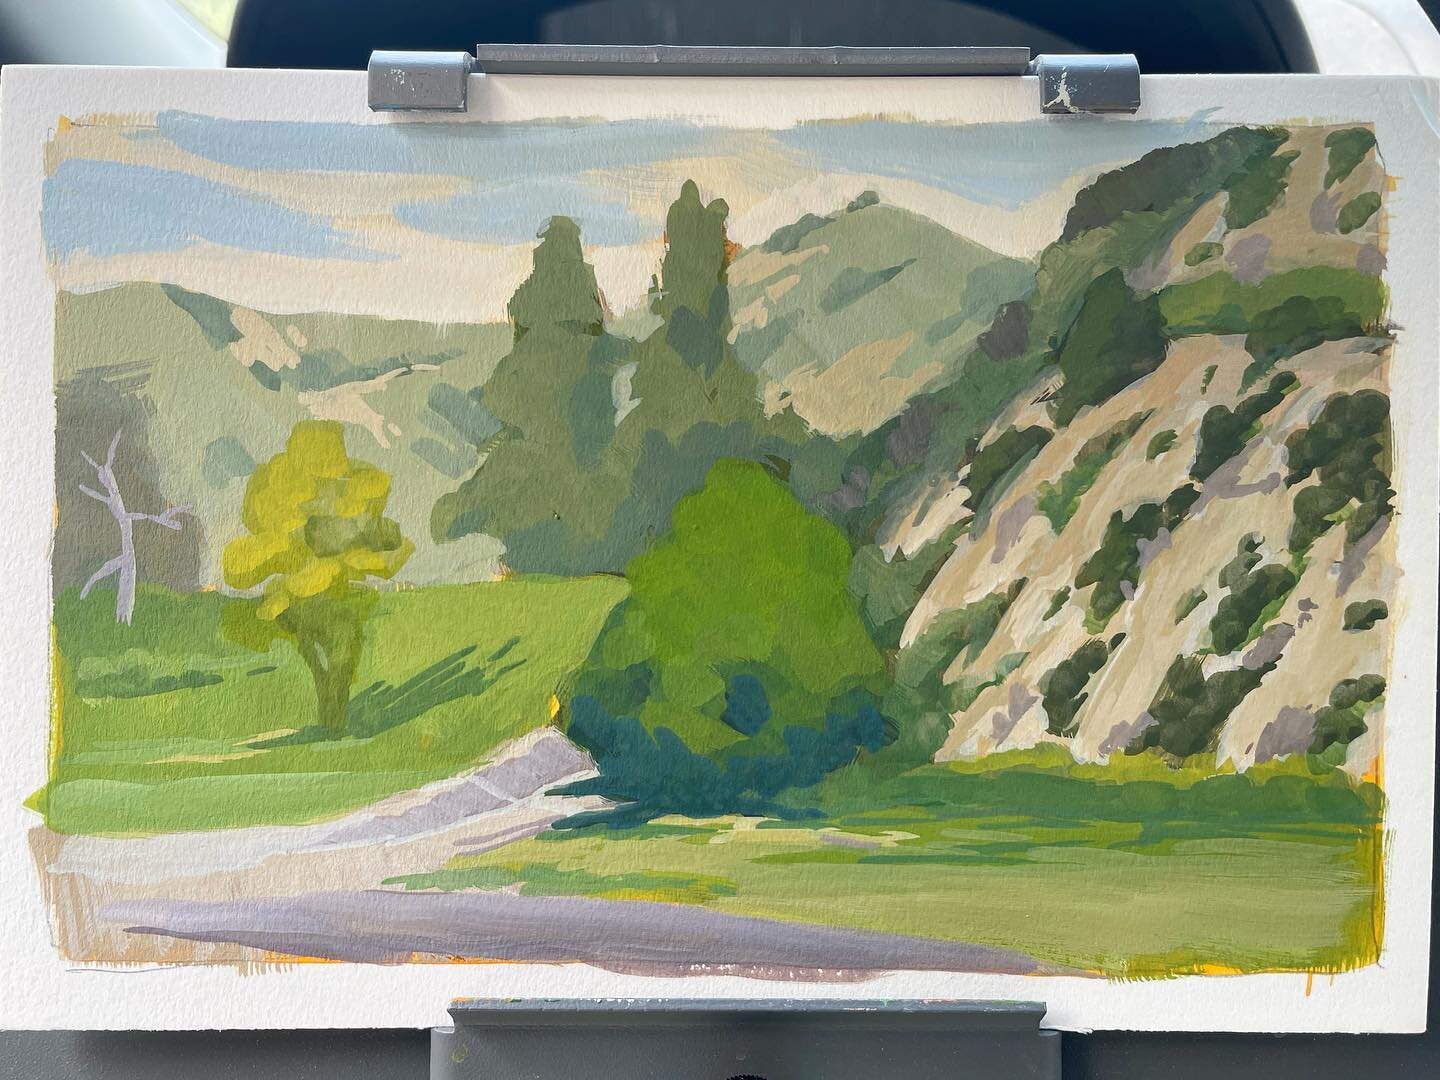 #pleinairpril day 11 Up in the hills #pleinair #painting #pleinairpainting #gouache #burbank #painterofaight